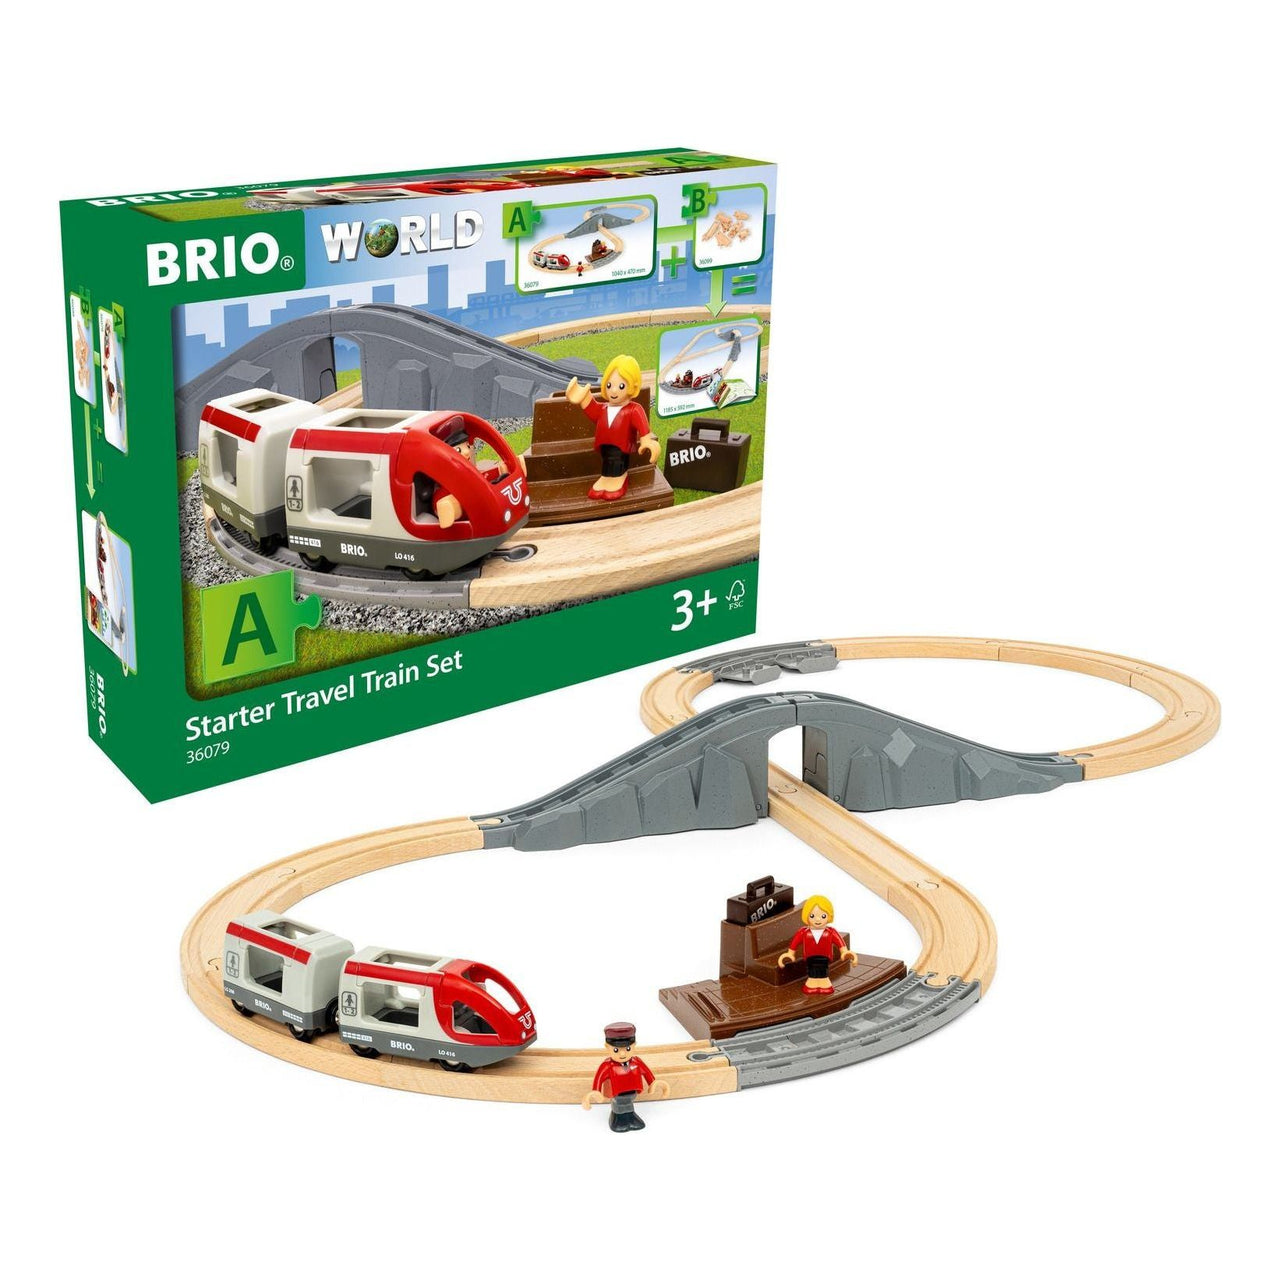 Brio Starter Travel Train Set A BRIO